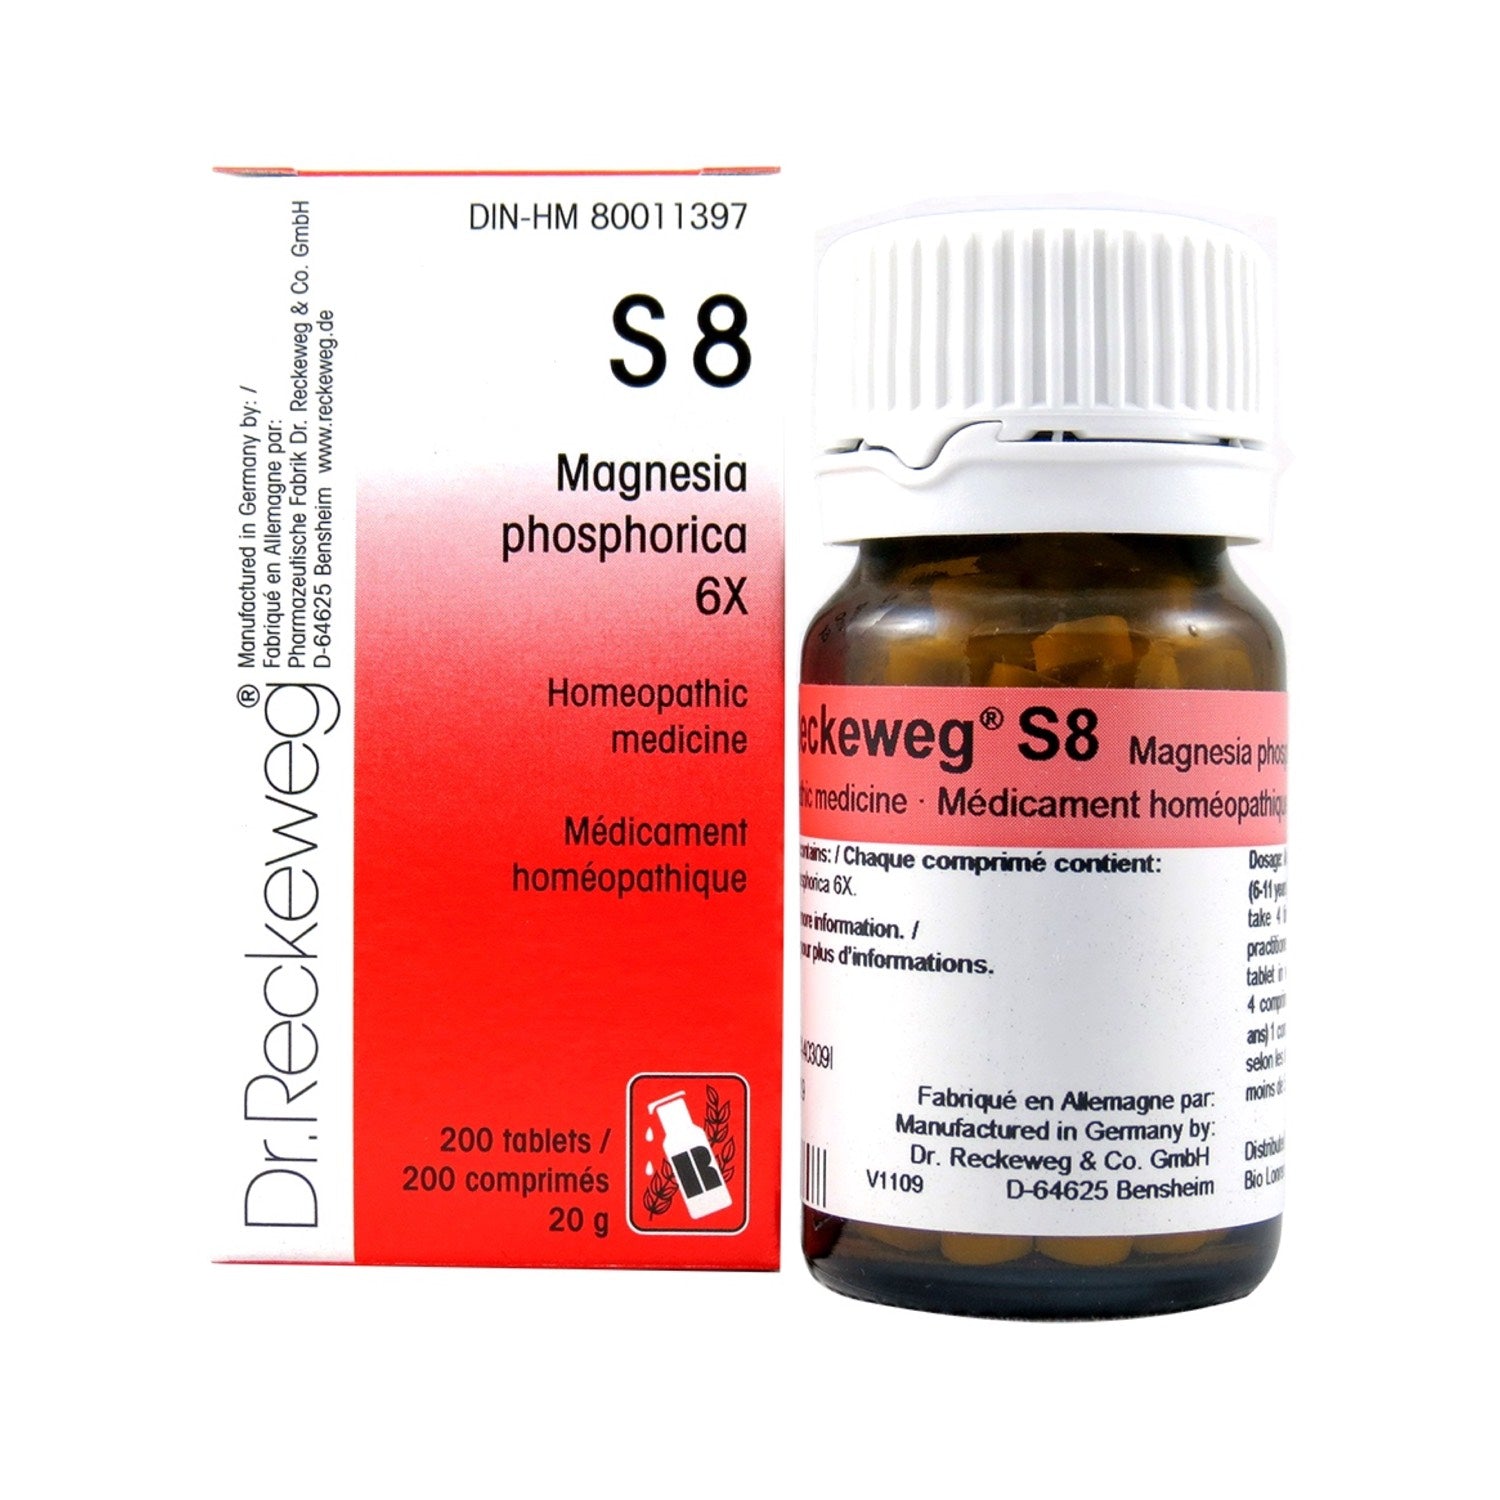 S8 Magnesia phosphorica, anti-spasmodic, Schuessler salt 6X and 200 tablets (20 g)